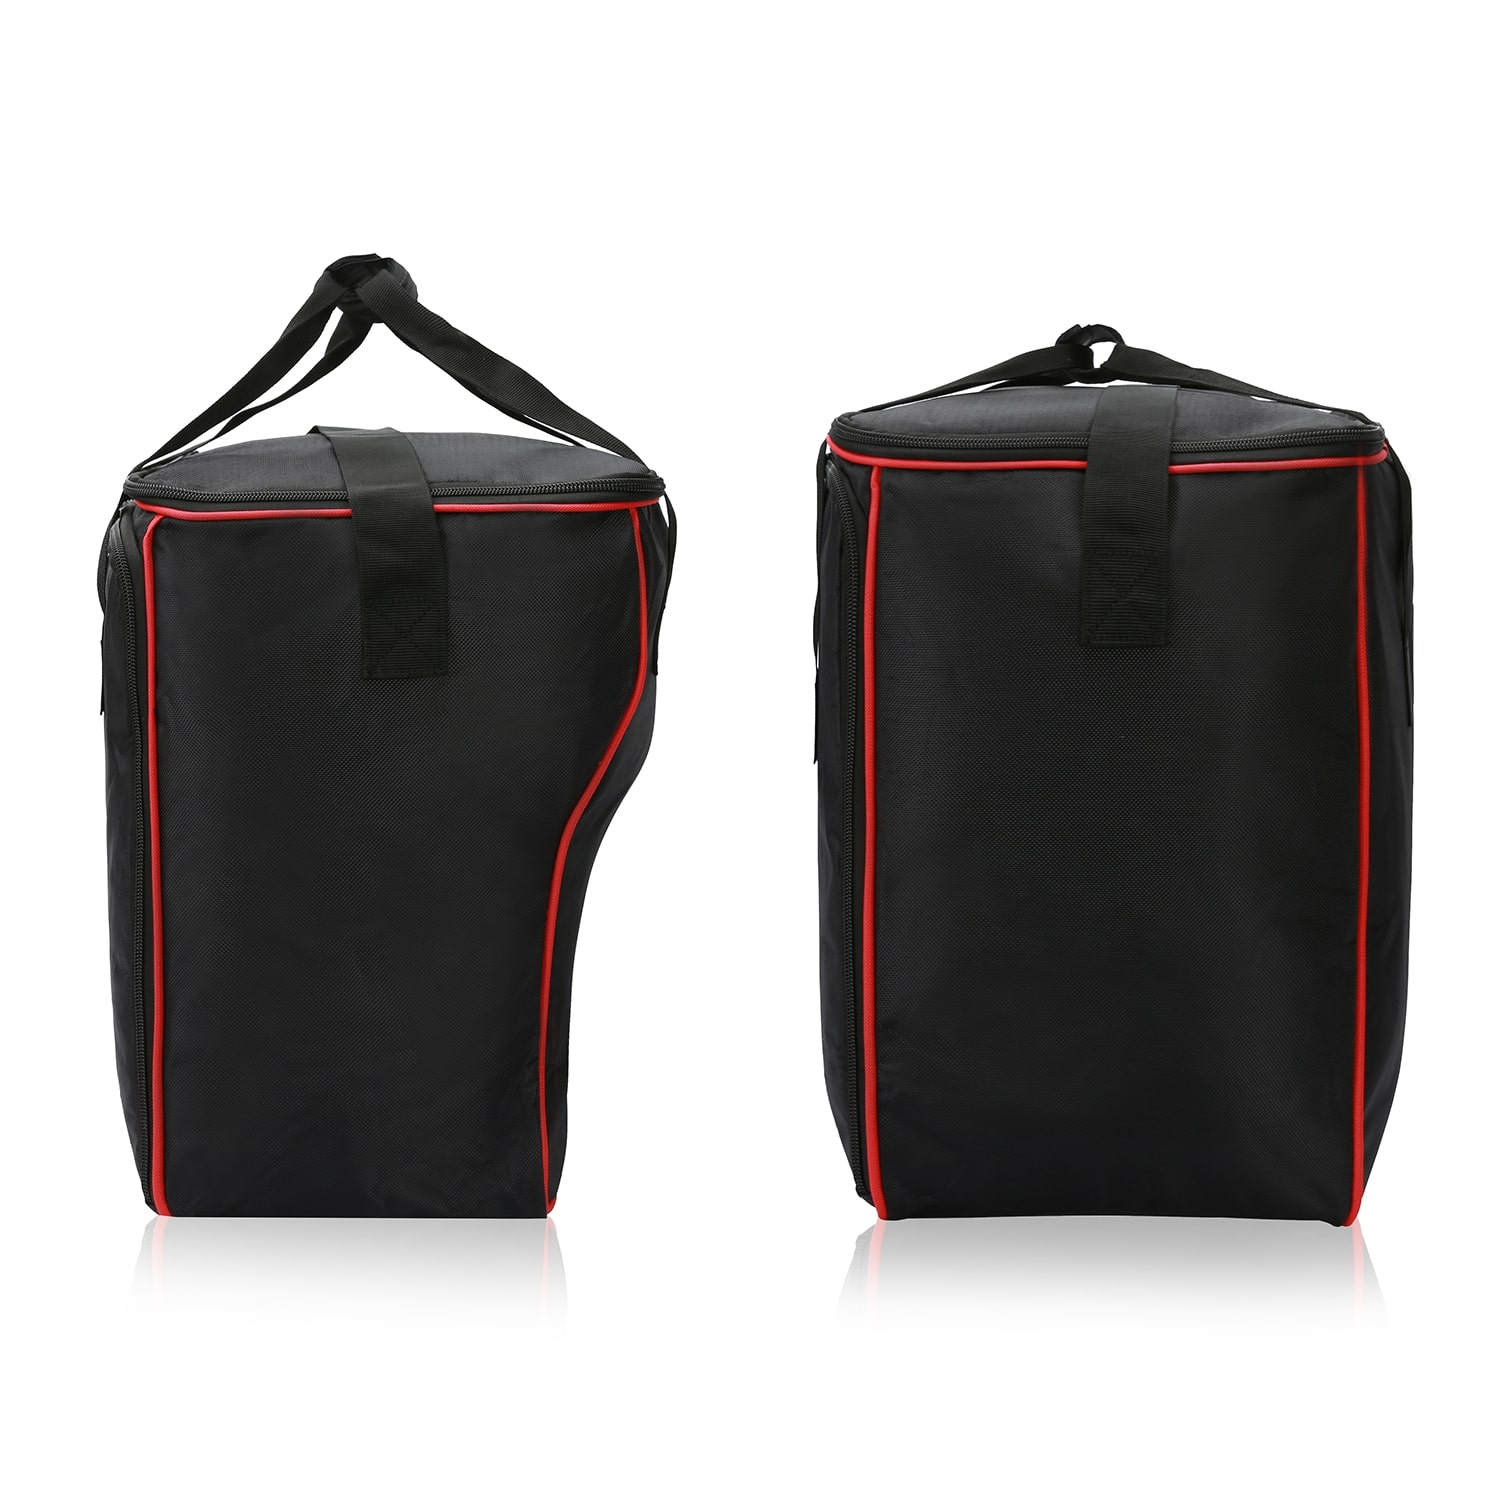  Sacs intérieurs pour valises latérales Ducati Multistrada à partir de 2015 | Multistrada 950 | Multistrada 1200 | Multistrada 1260